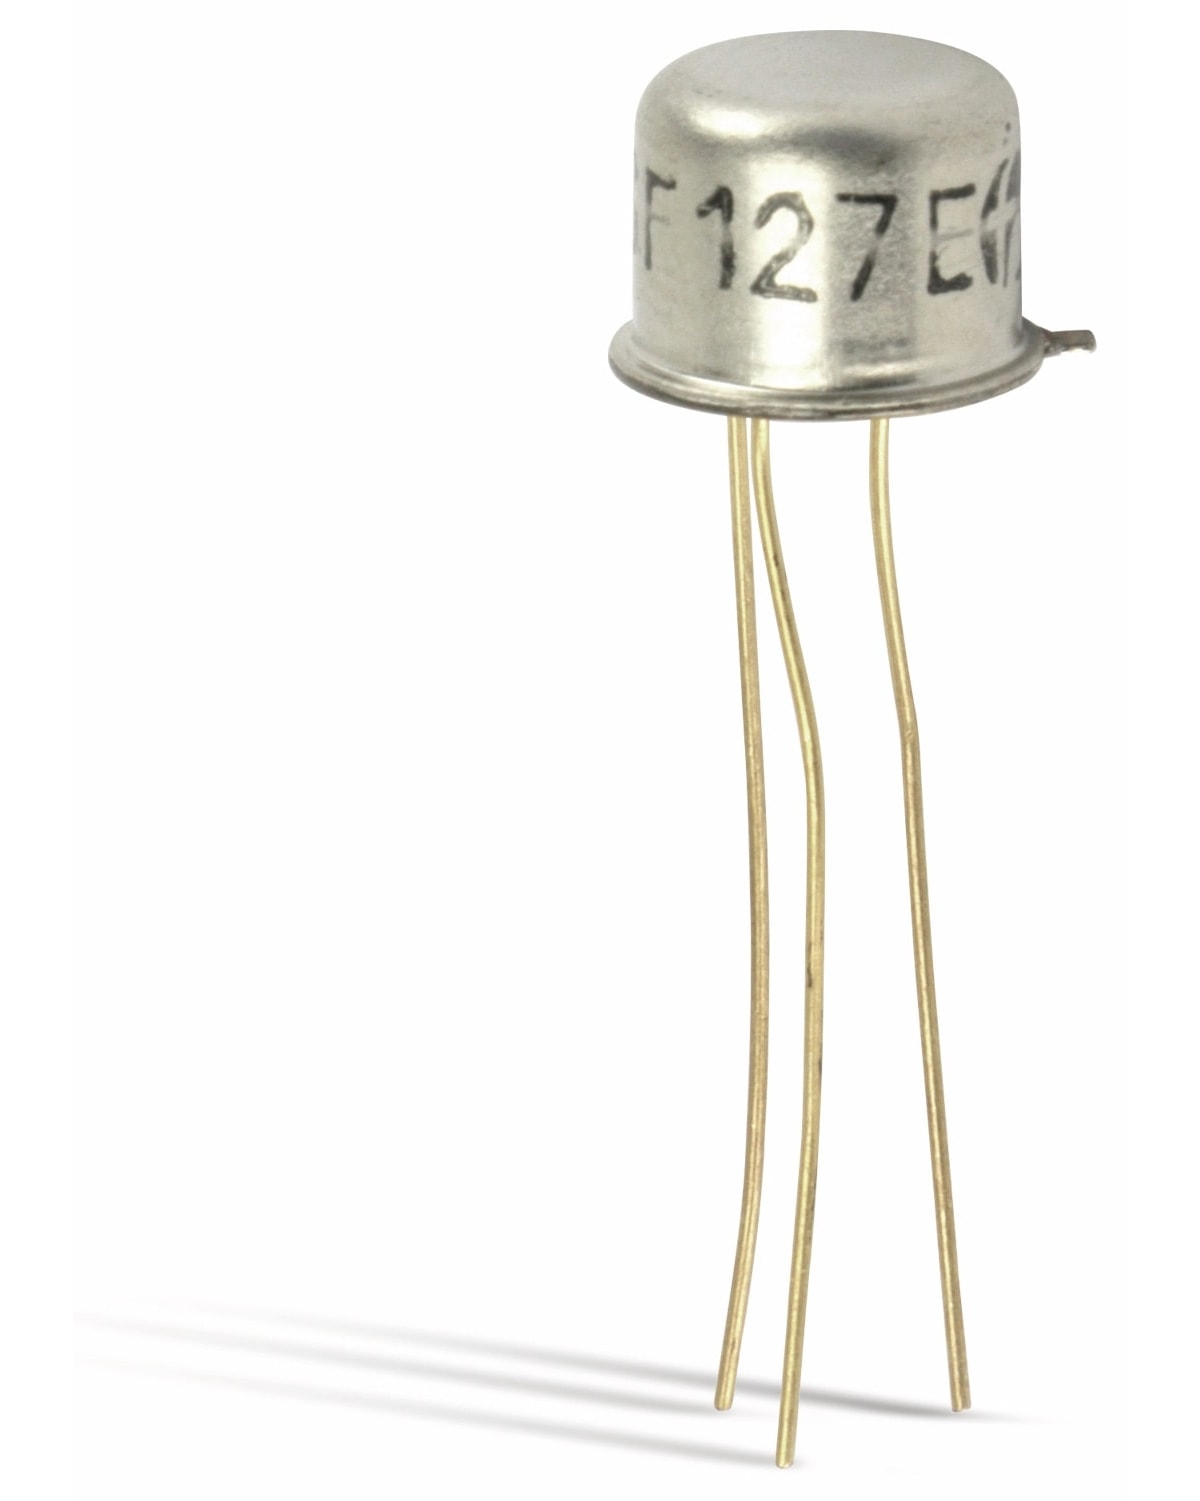 RFT Planar-Epitaxie-Transistor SF127E